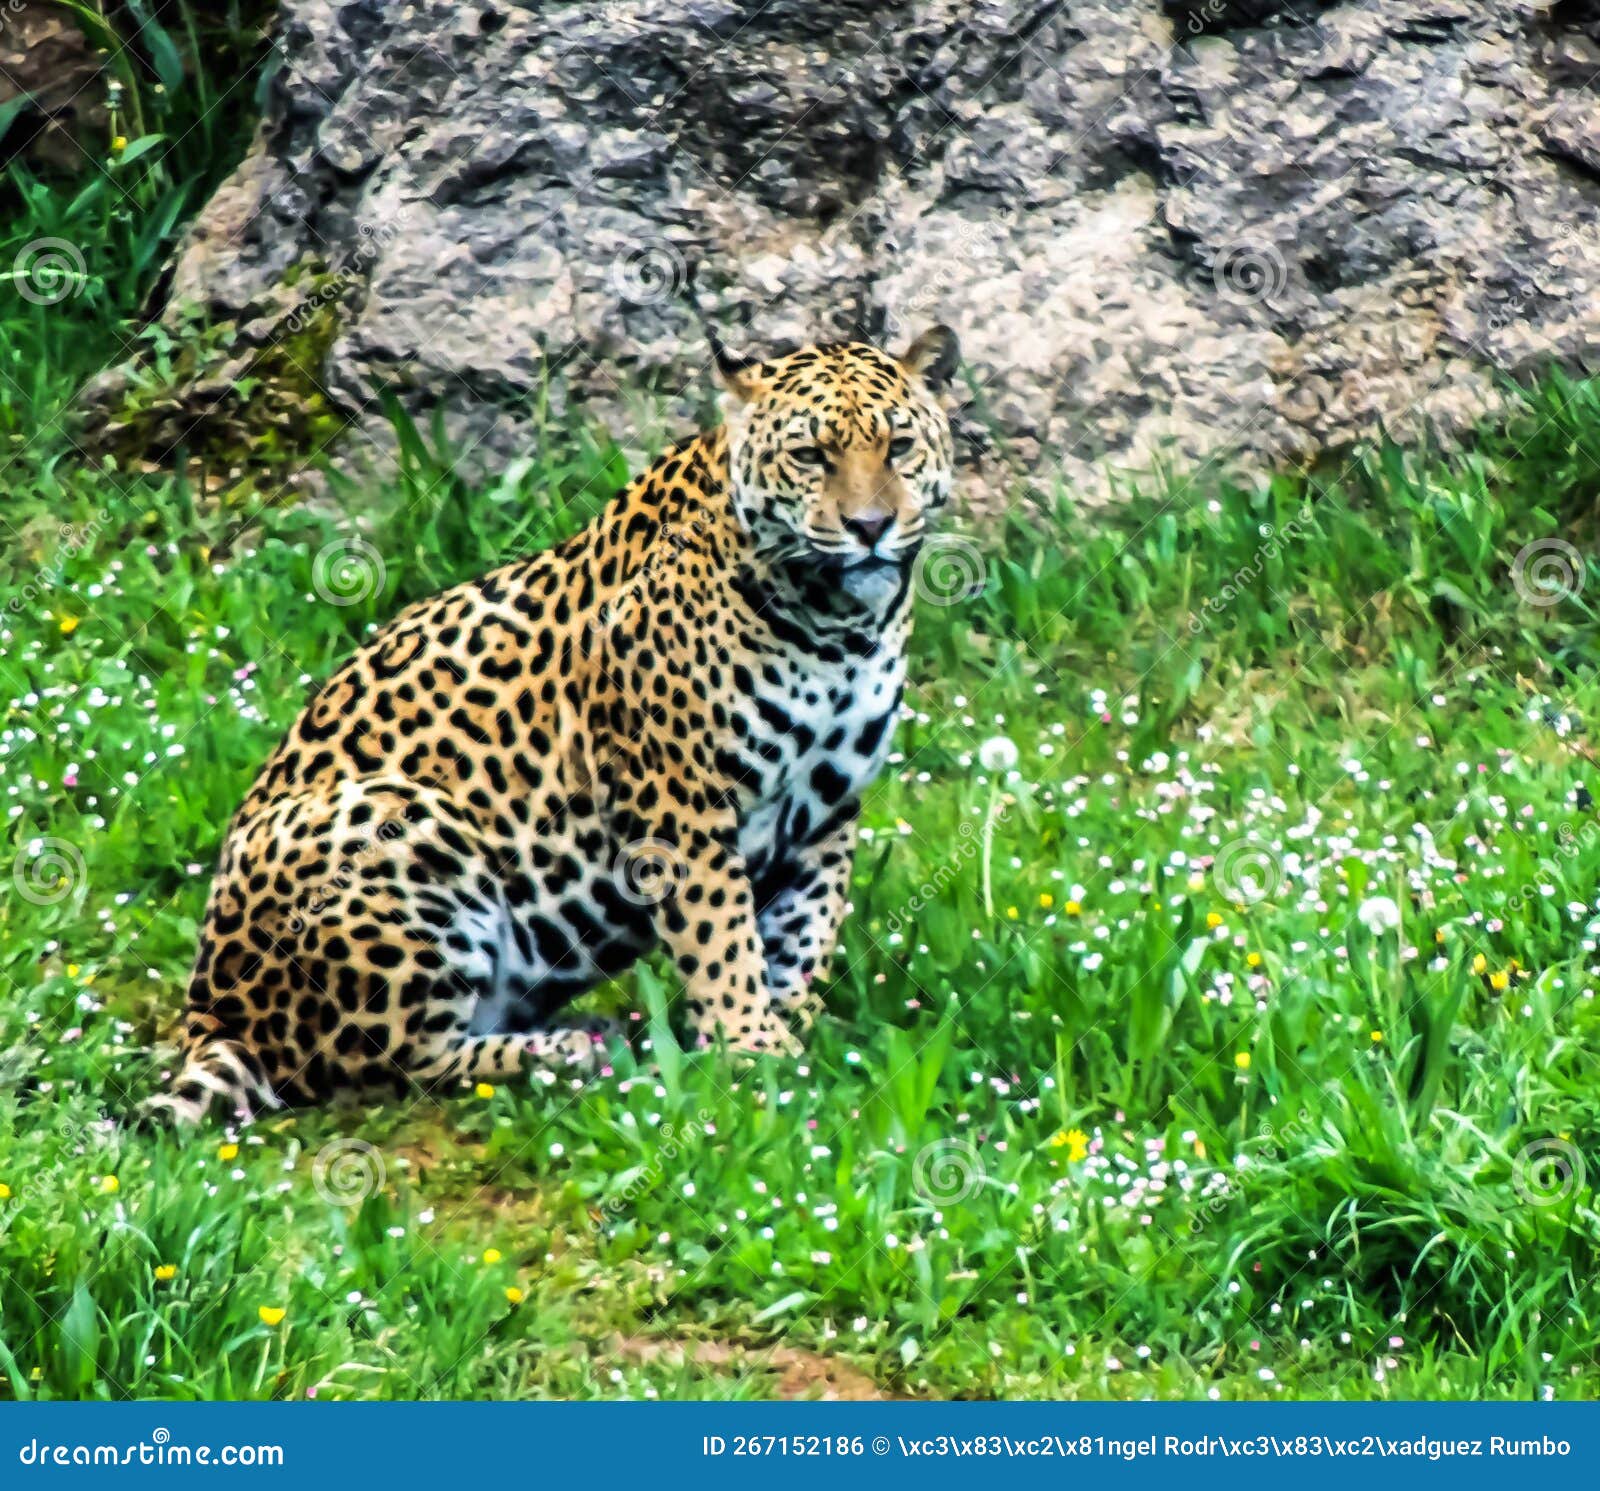 leopardo sitting in the grass